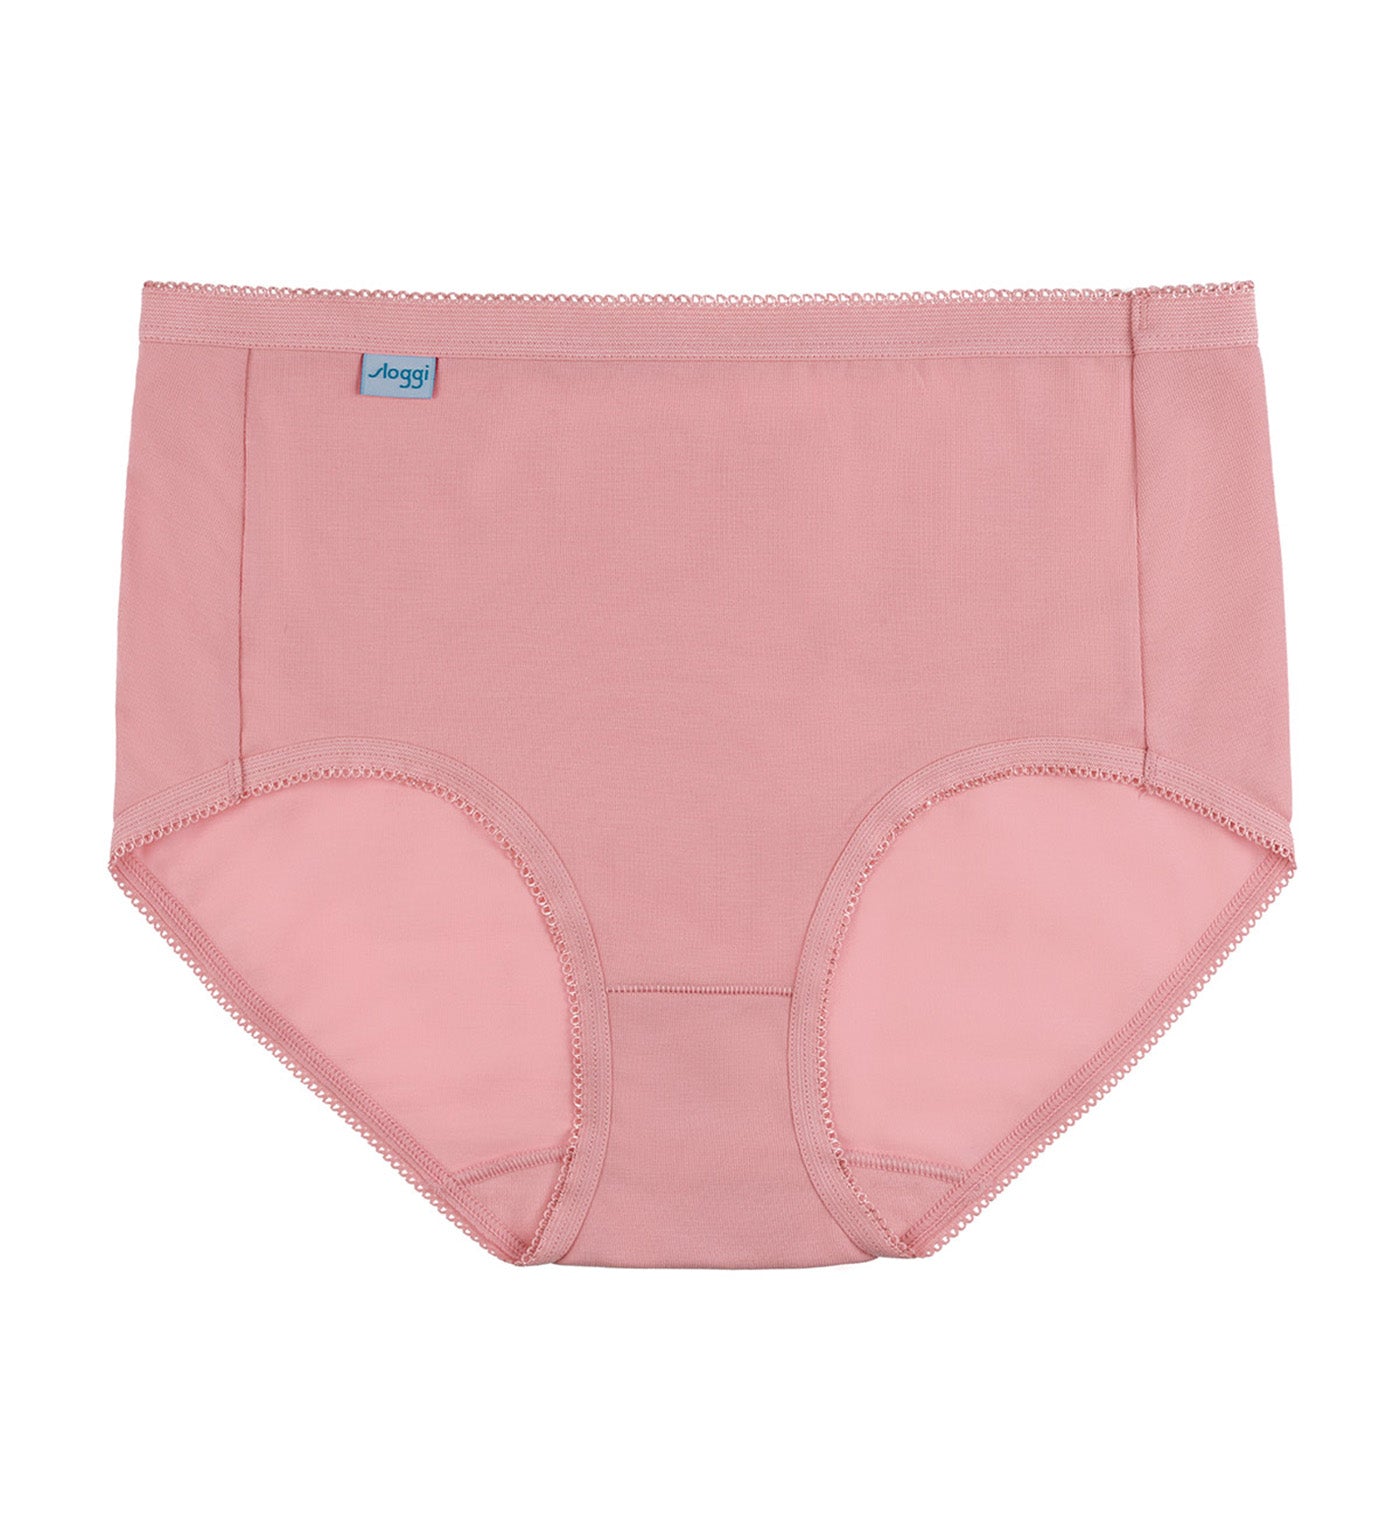 Sloggi Comfort Maxi Panty Pink